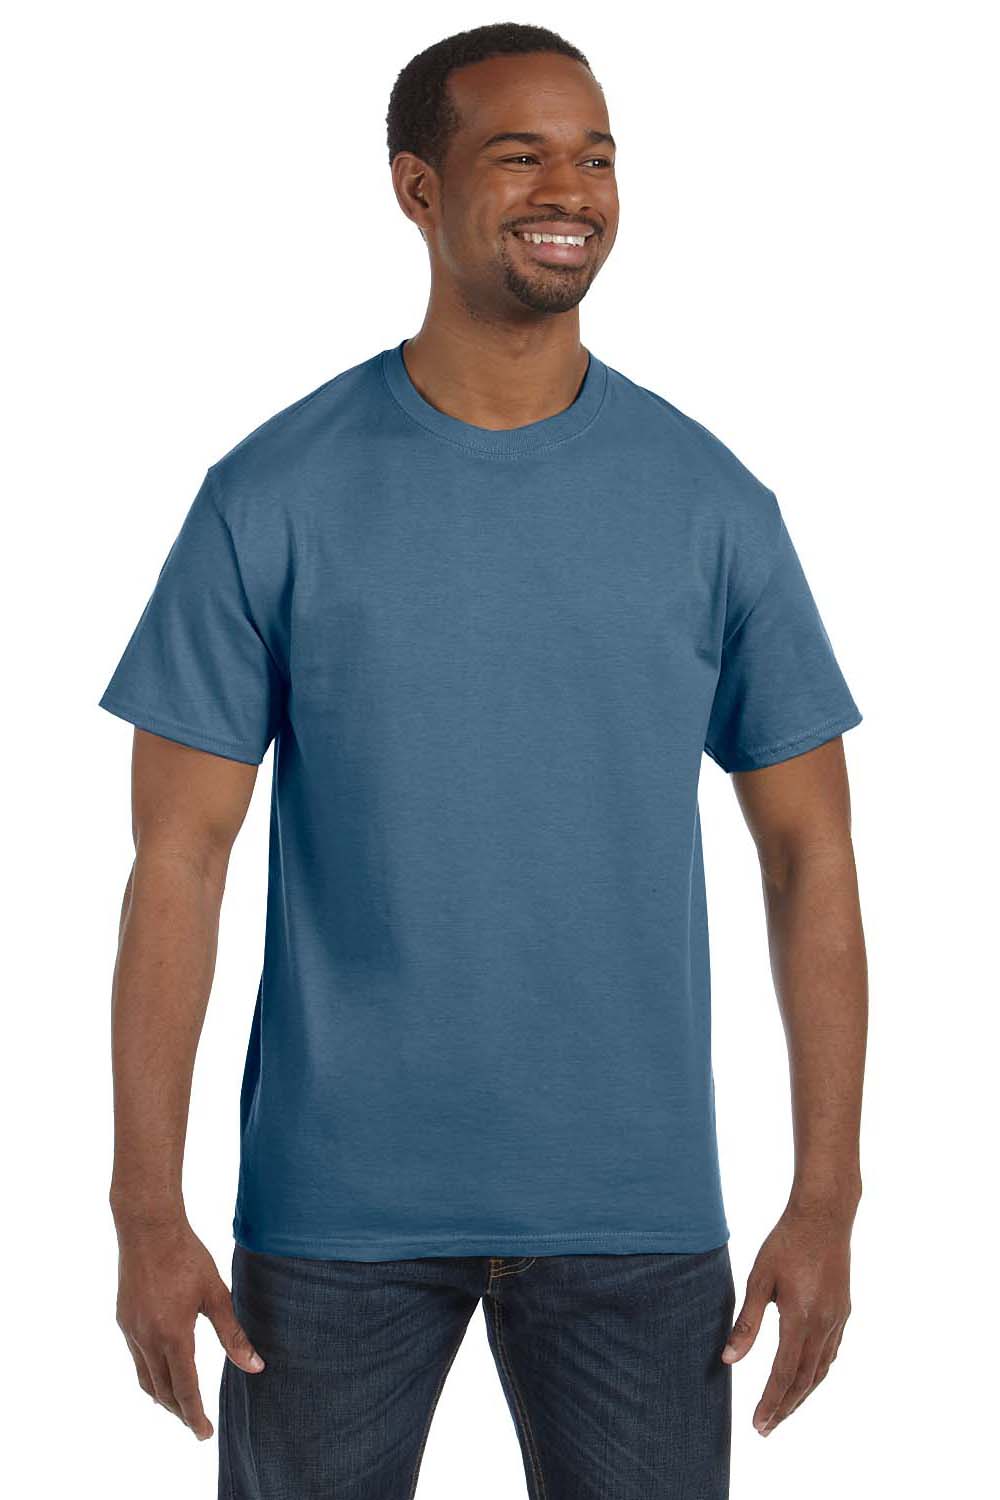 Hanes 5250T Mens ComfortSoft Short Sleeve Crewneck T-Shirt Denim Blue Front